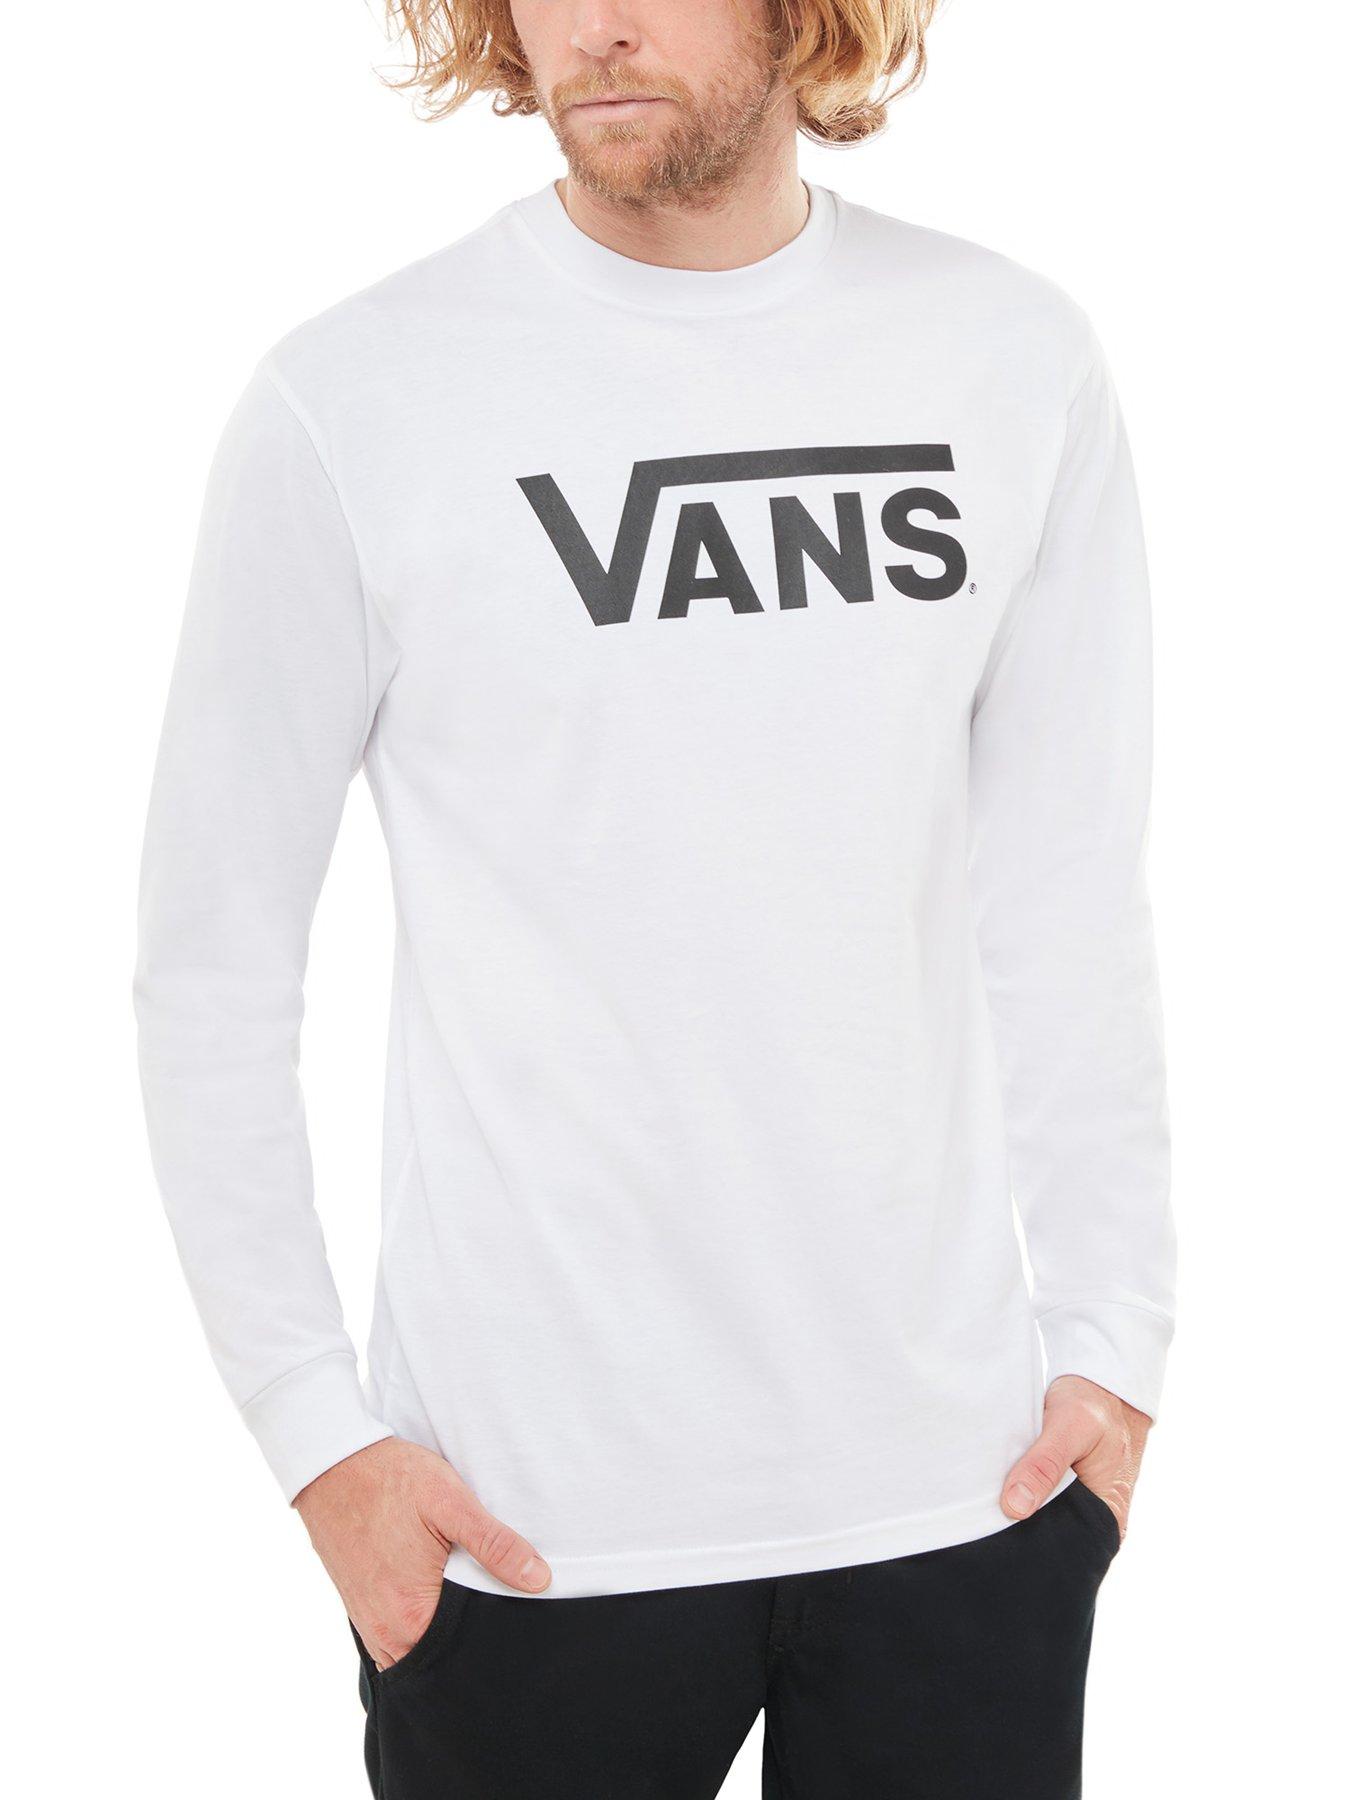 Vans Classic Long Sleeve T-Shirt - White/Black | very.co.uk